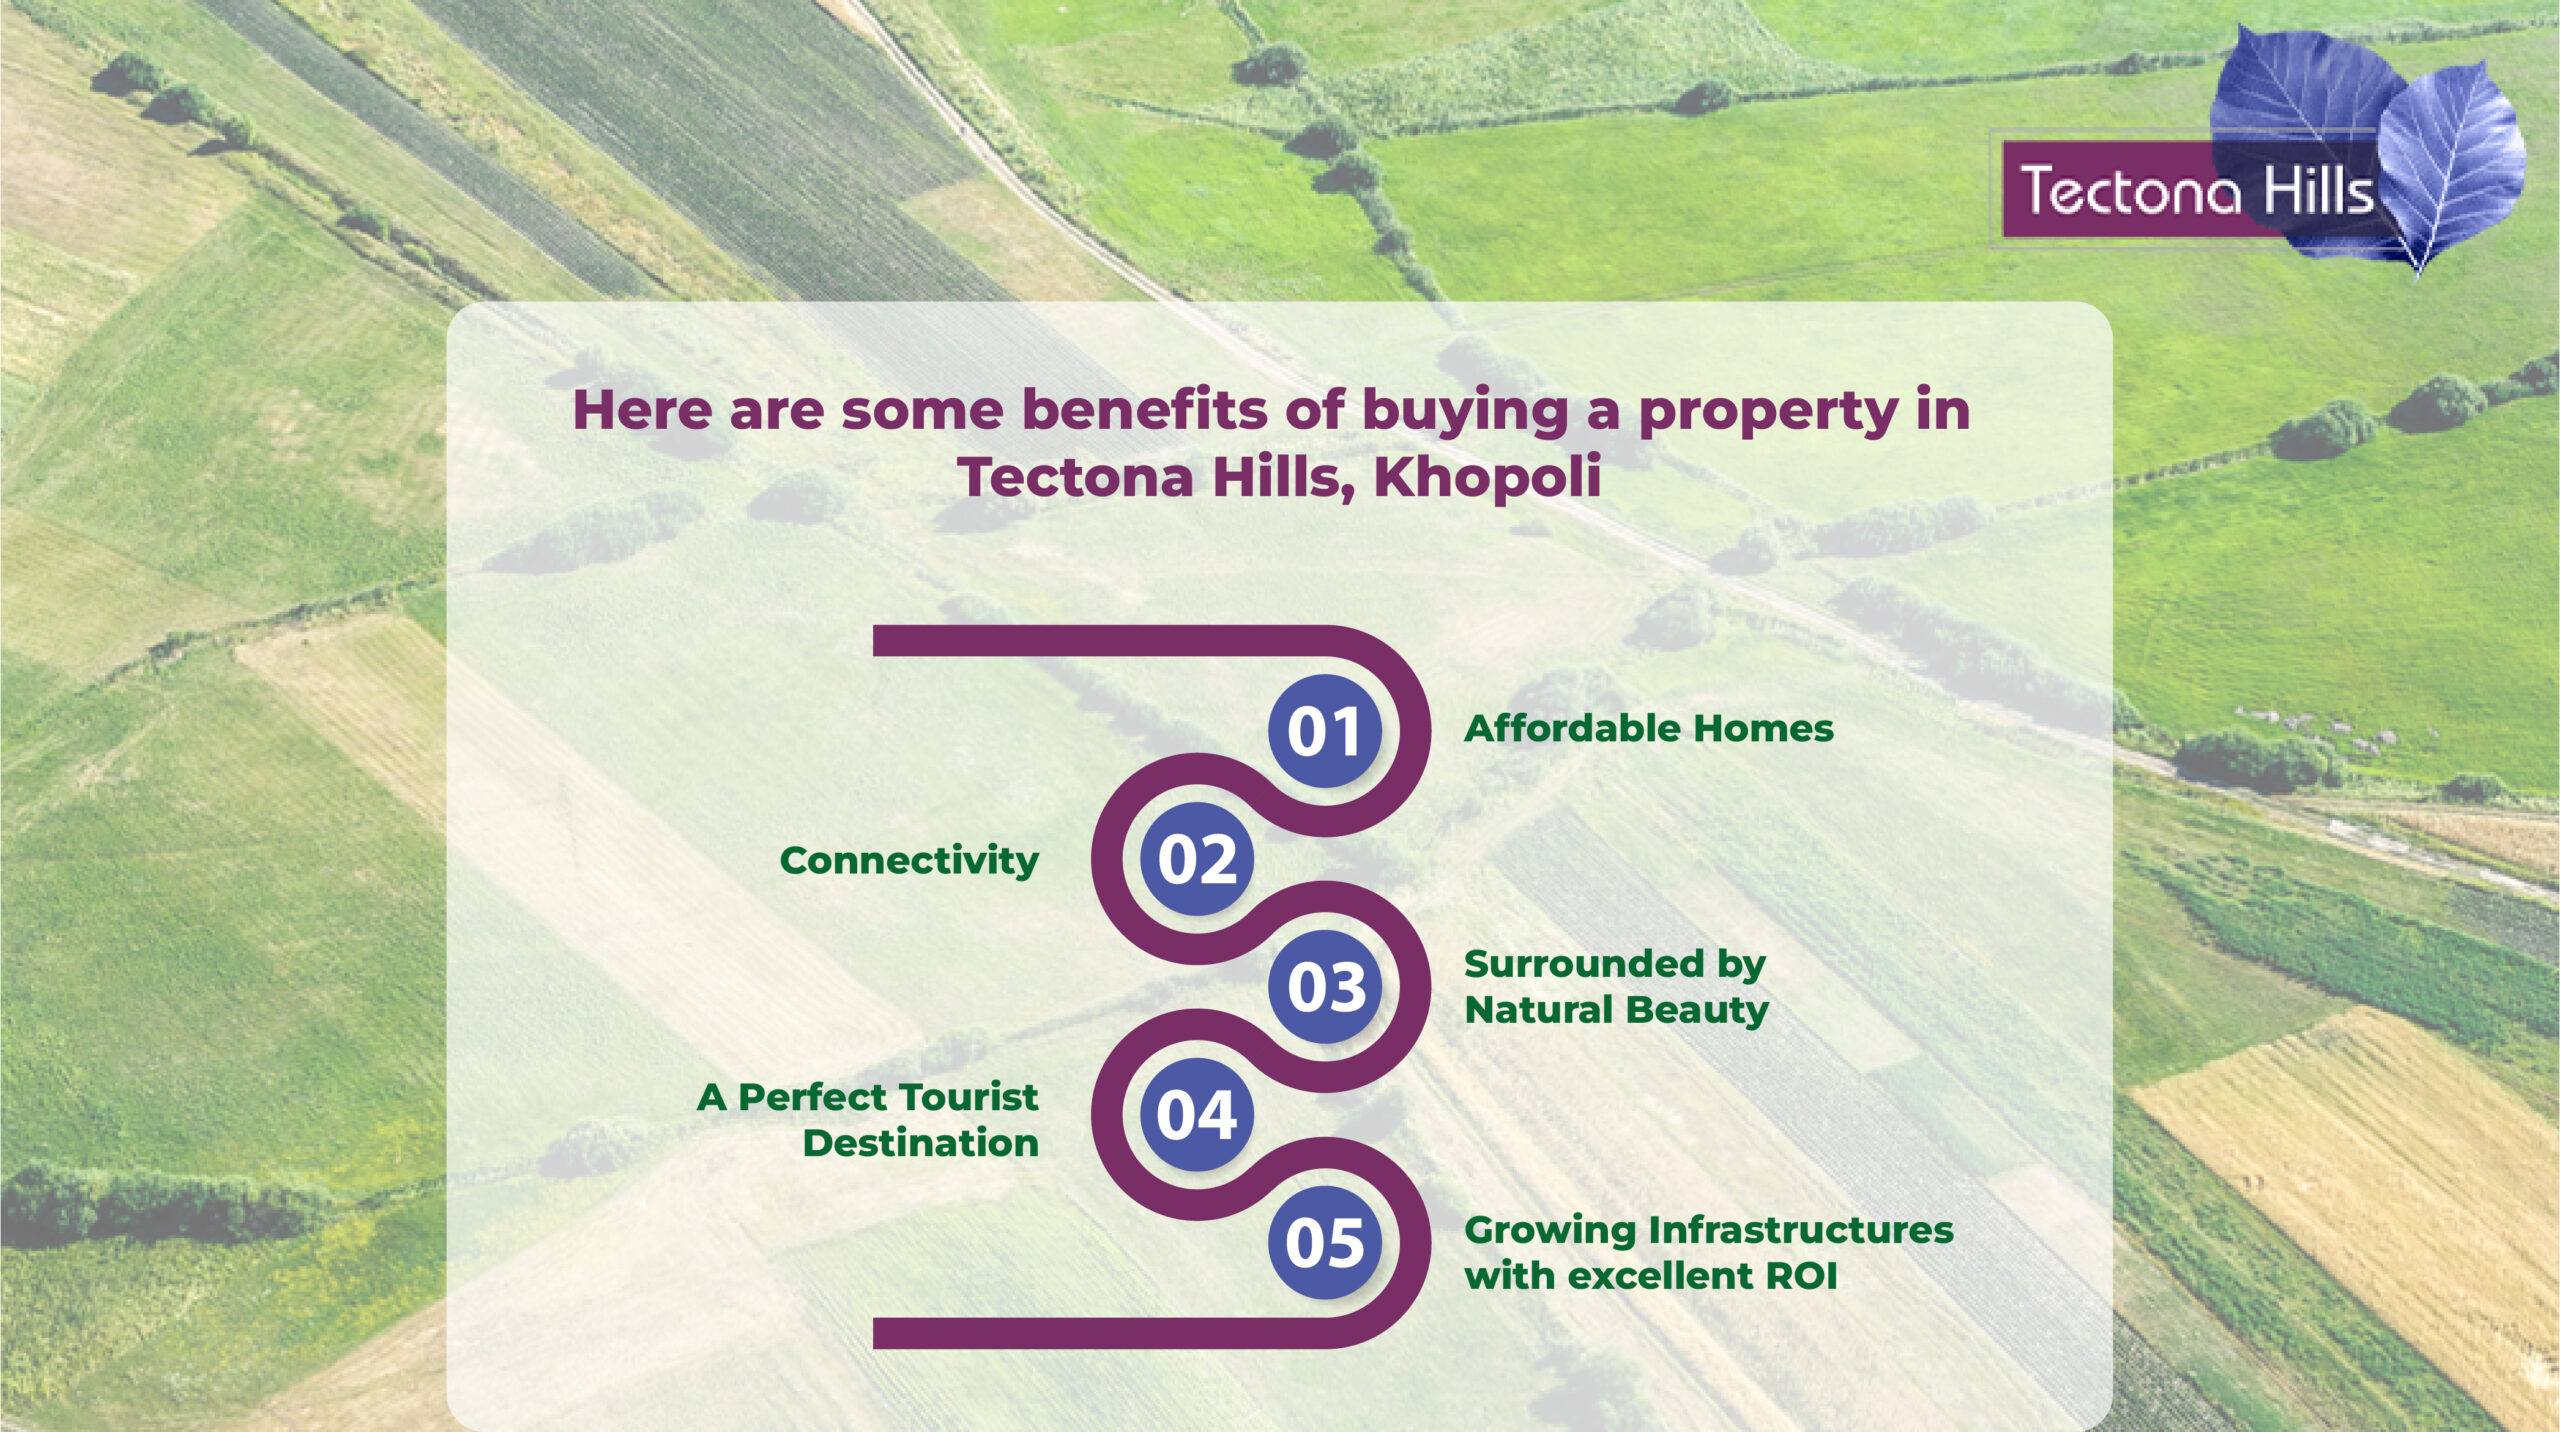 residential property in khopoli, | khopoli property investment